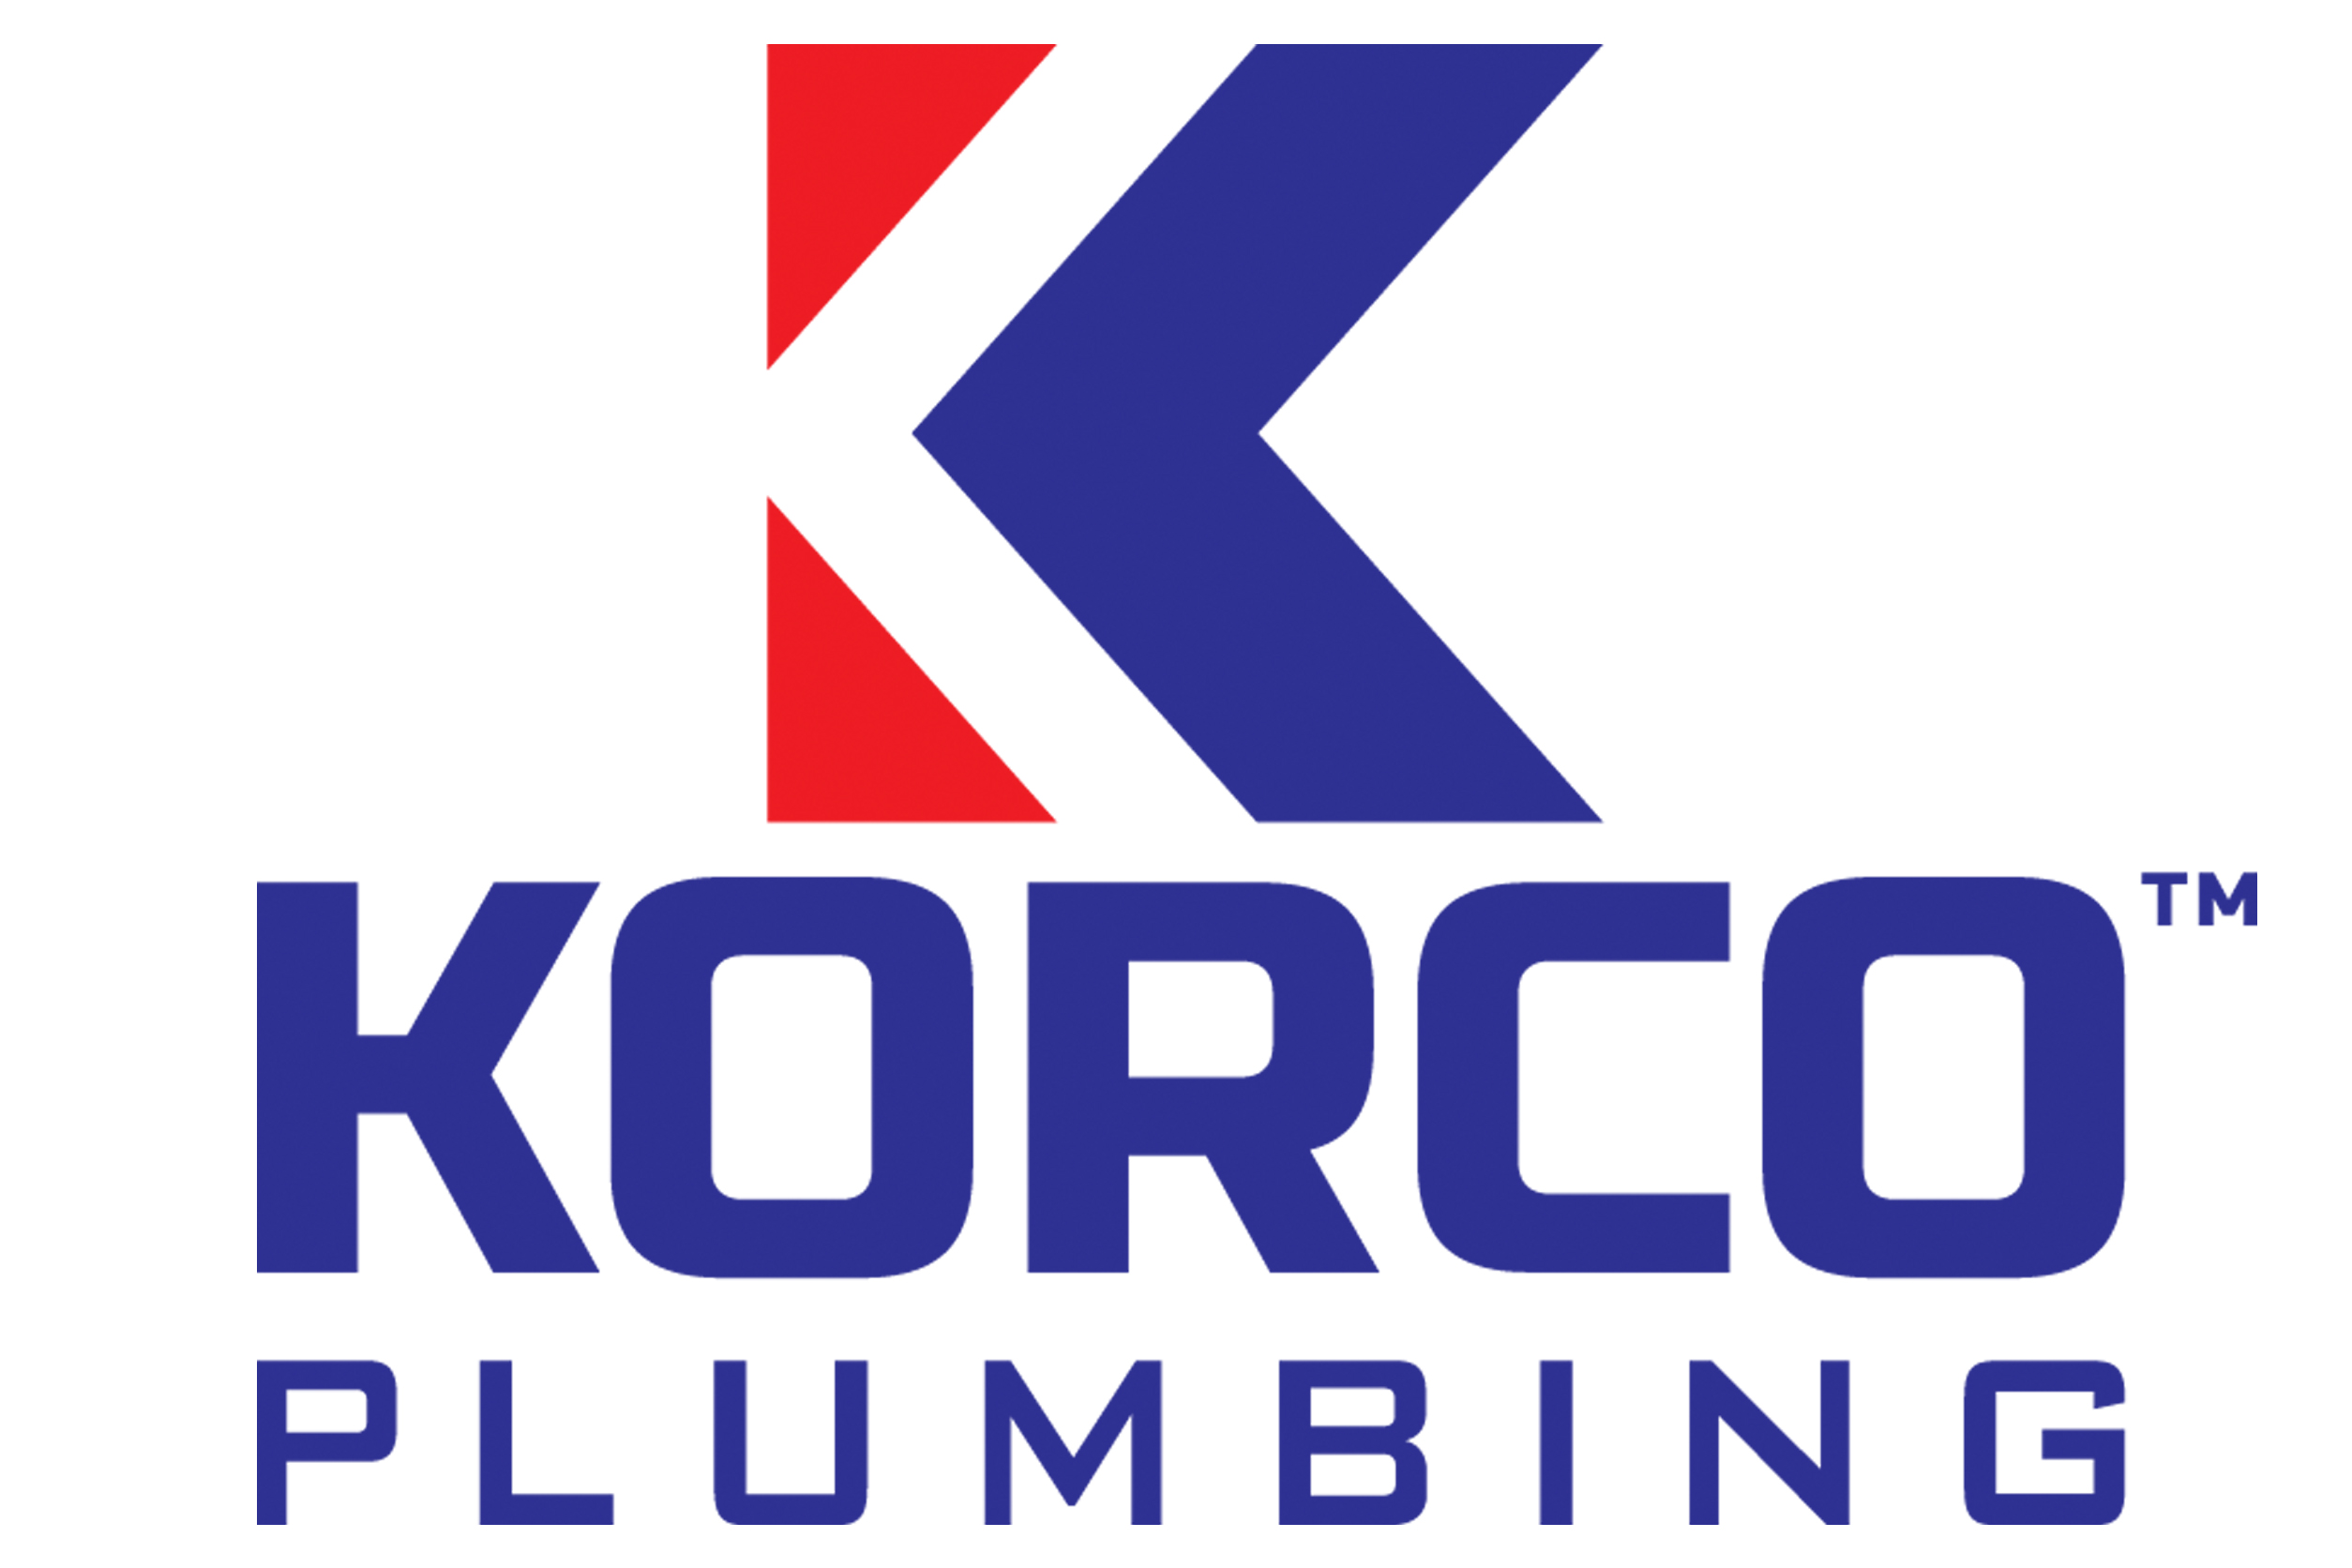 korco plumbing company logo rio rancho nm 87144